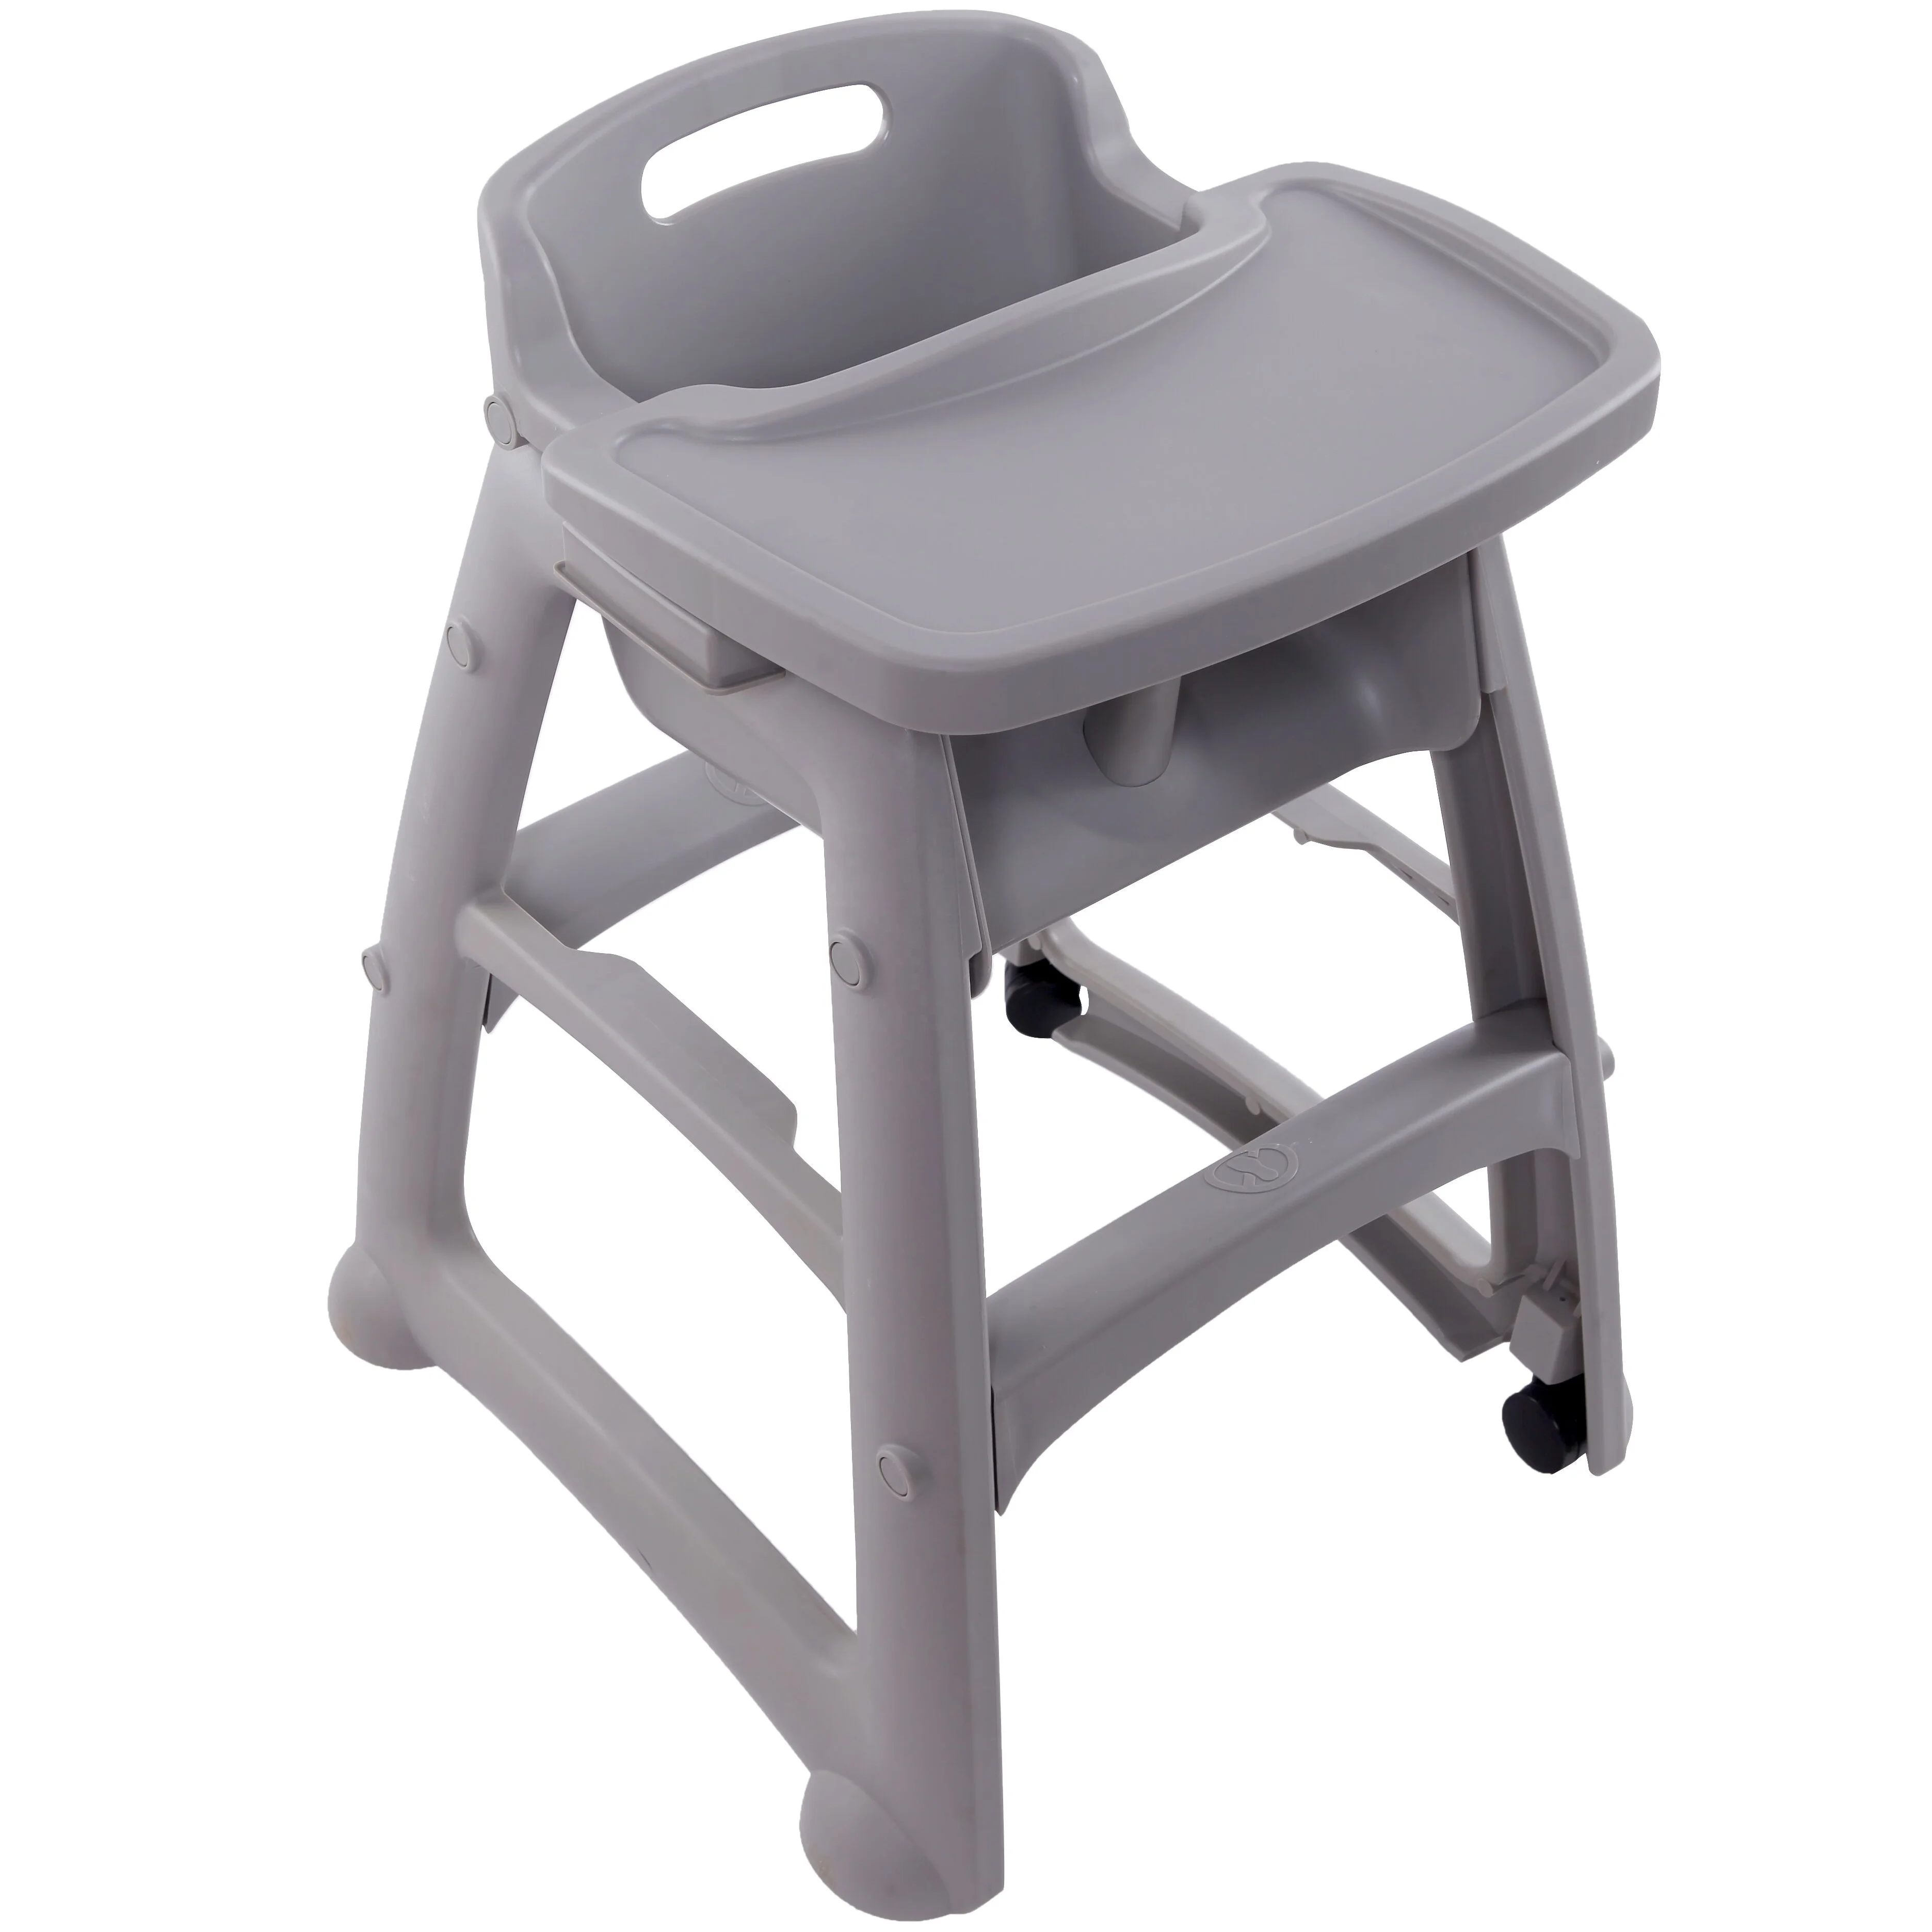 baby high chair plastic